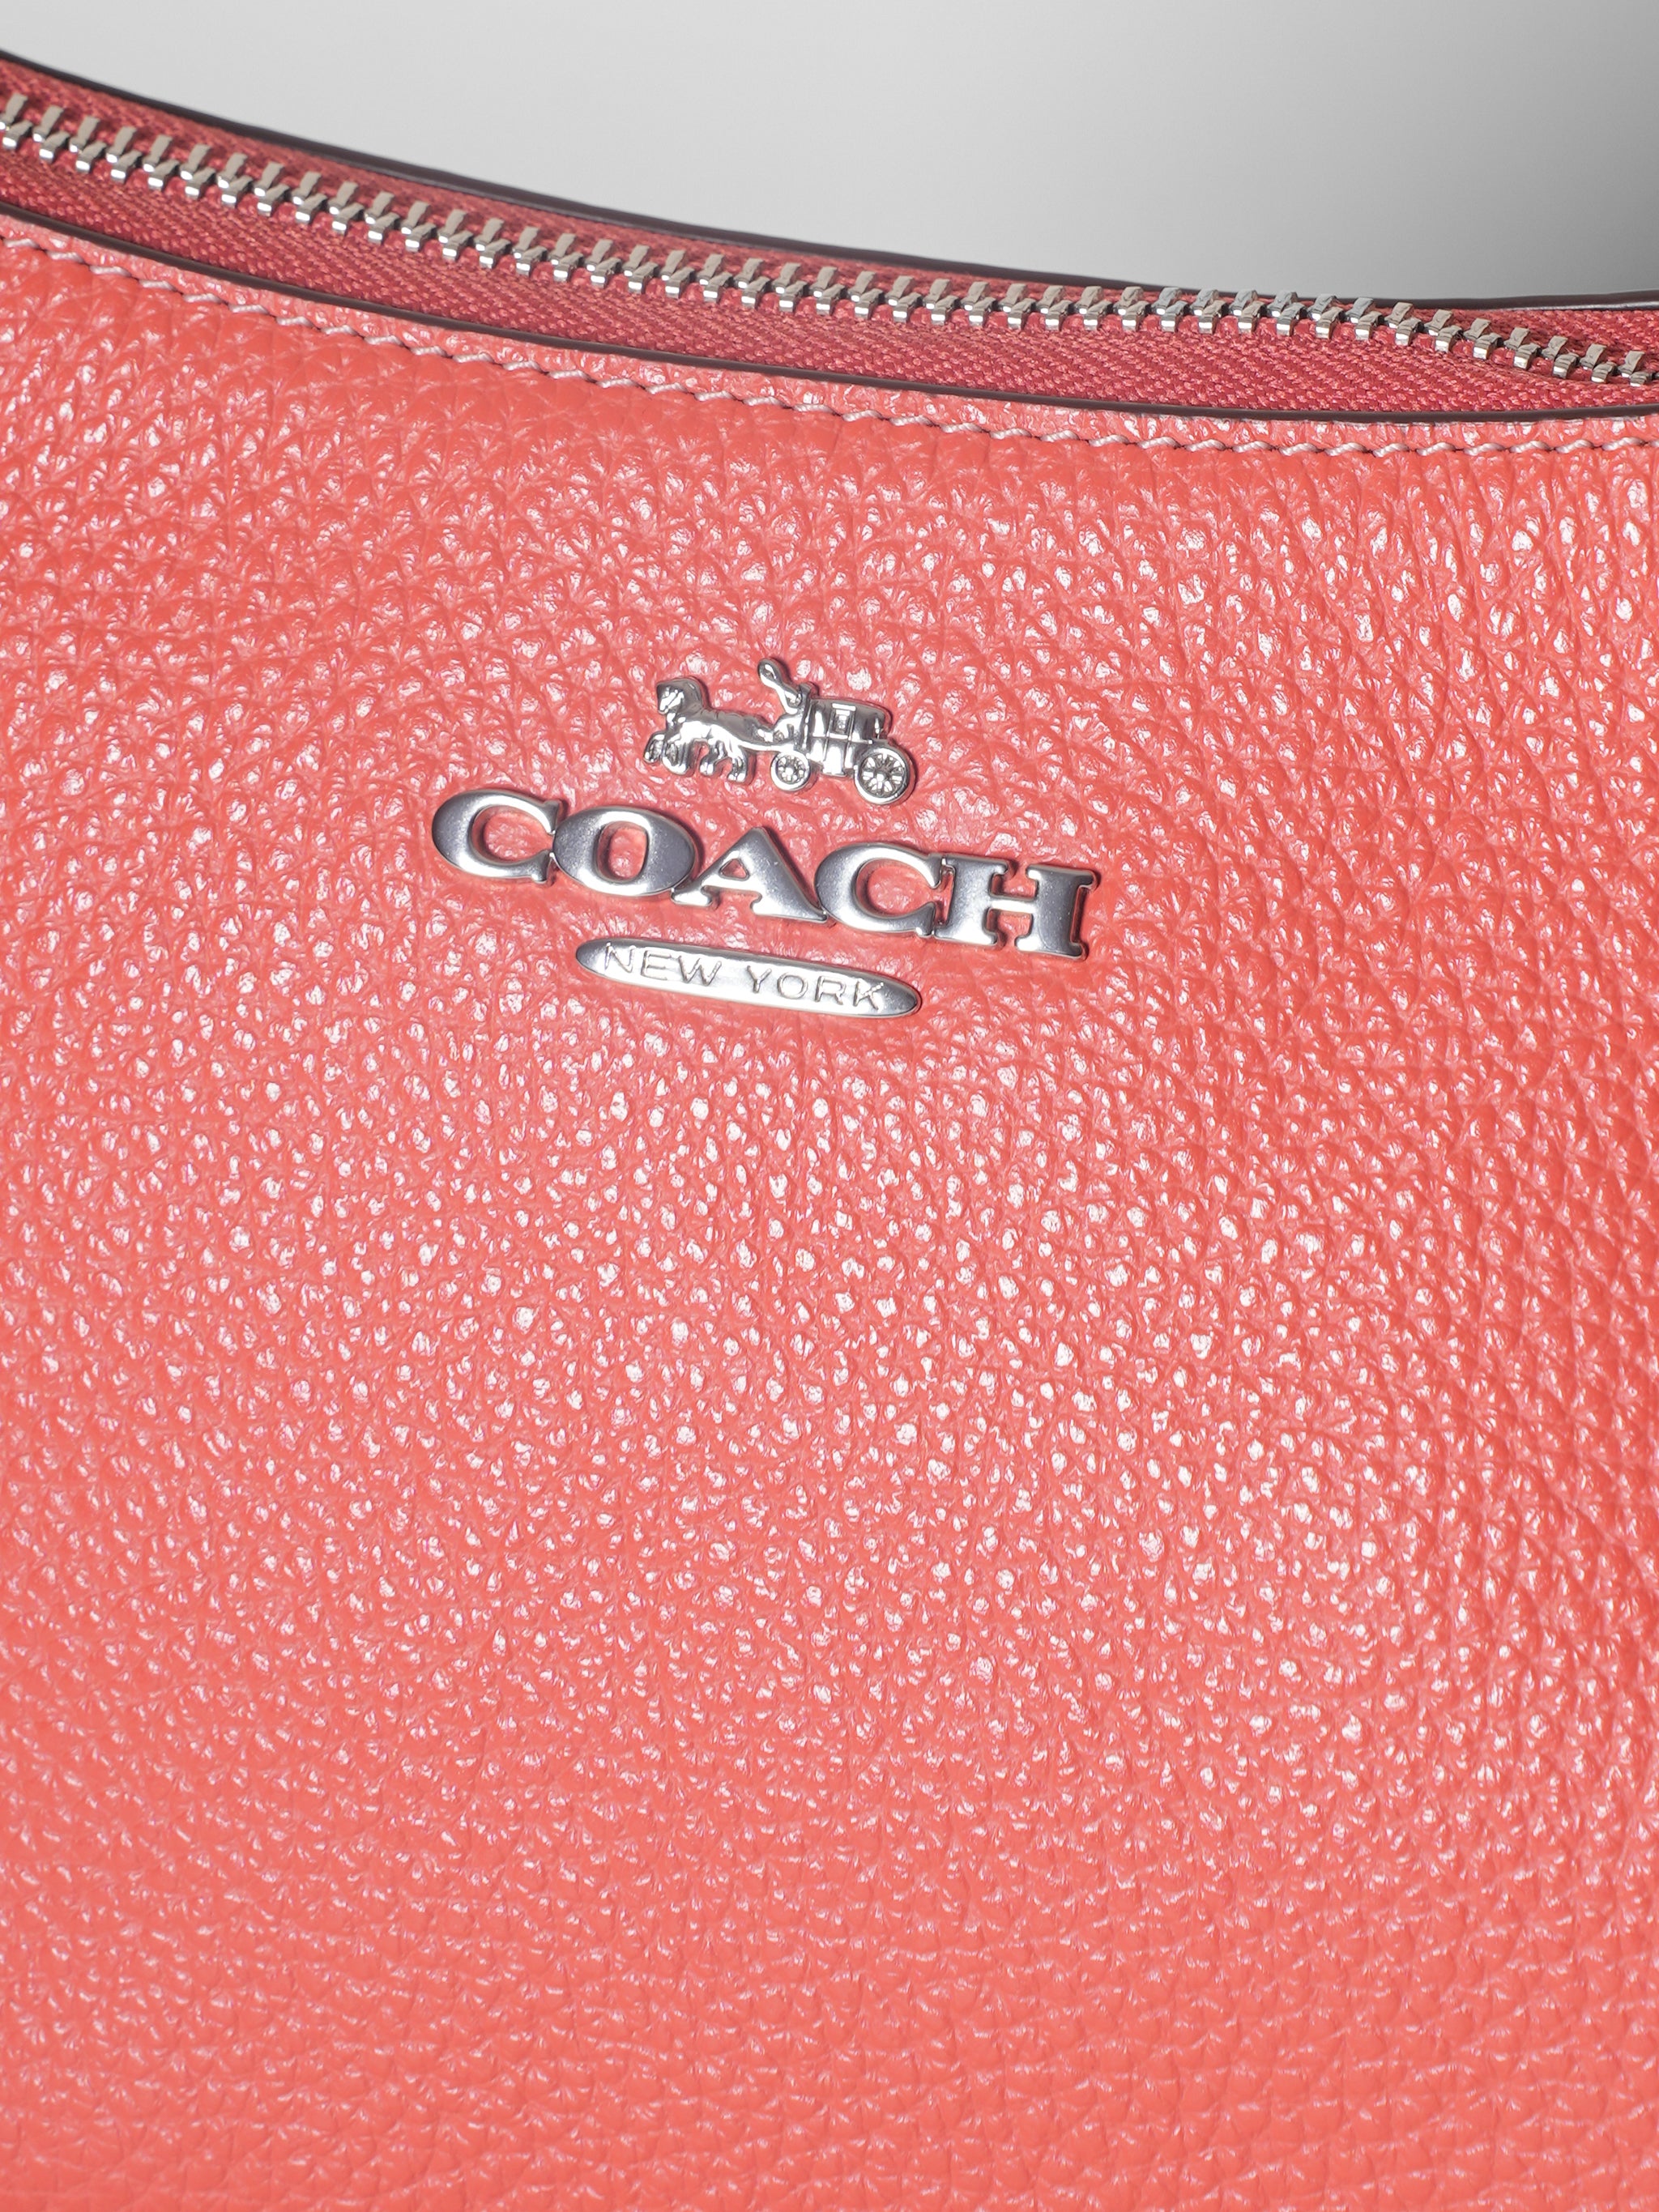 New Coach Peach Small Shoulder Bag